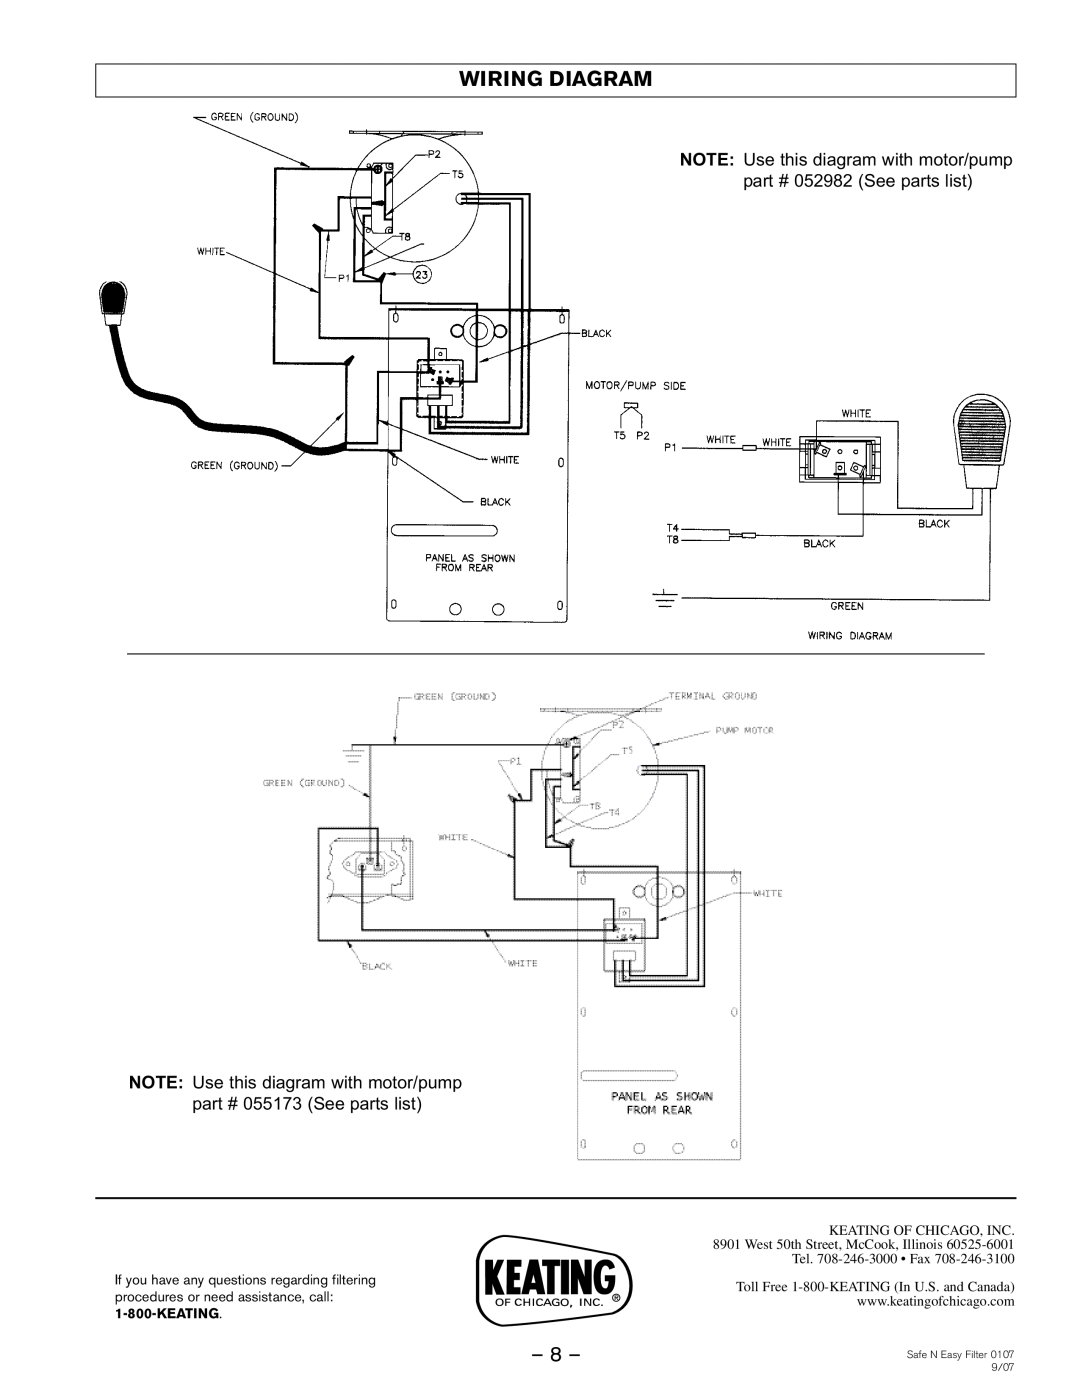 Keating Of Chicago 1-800 owner manual Wiring Diagram 